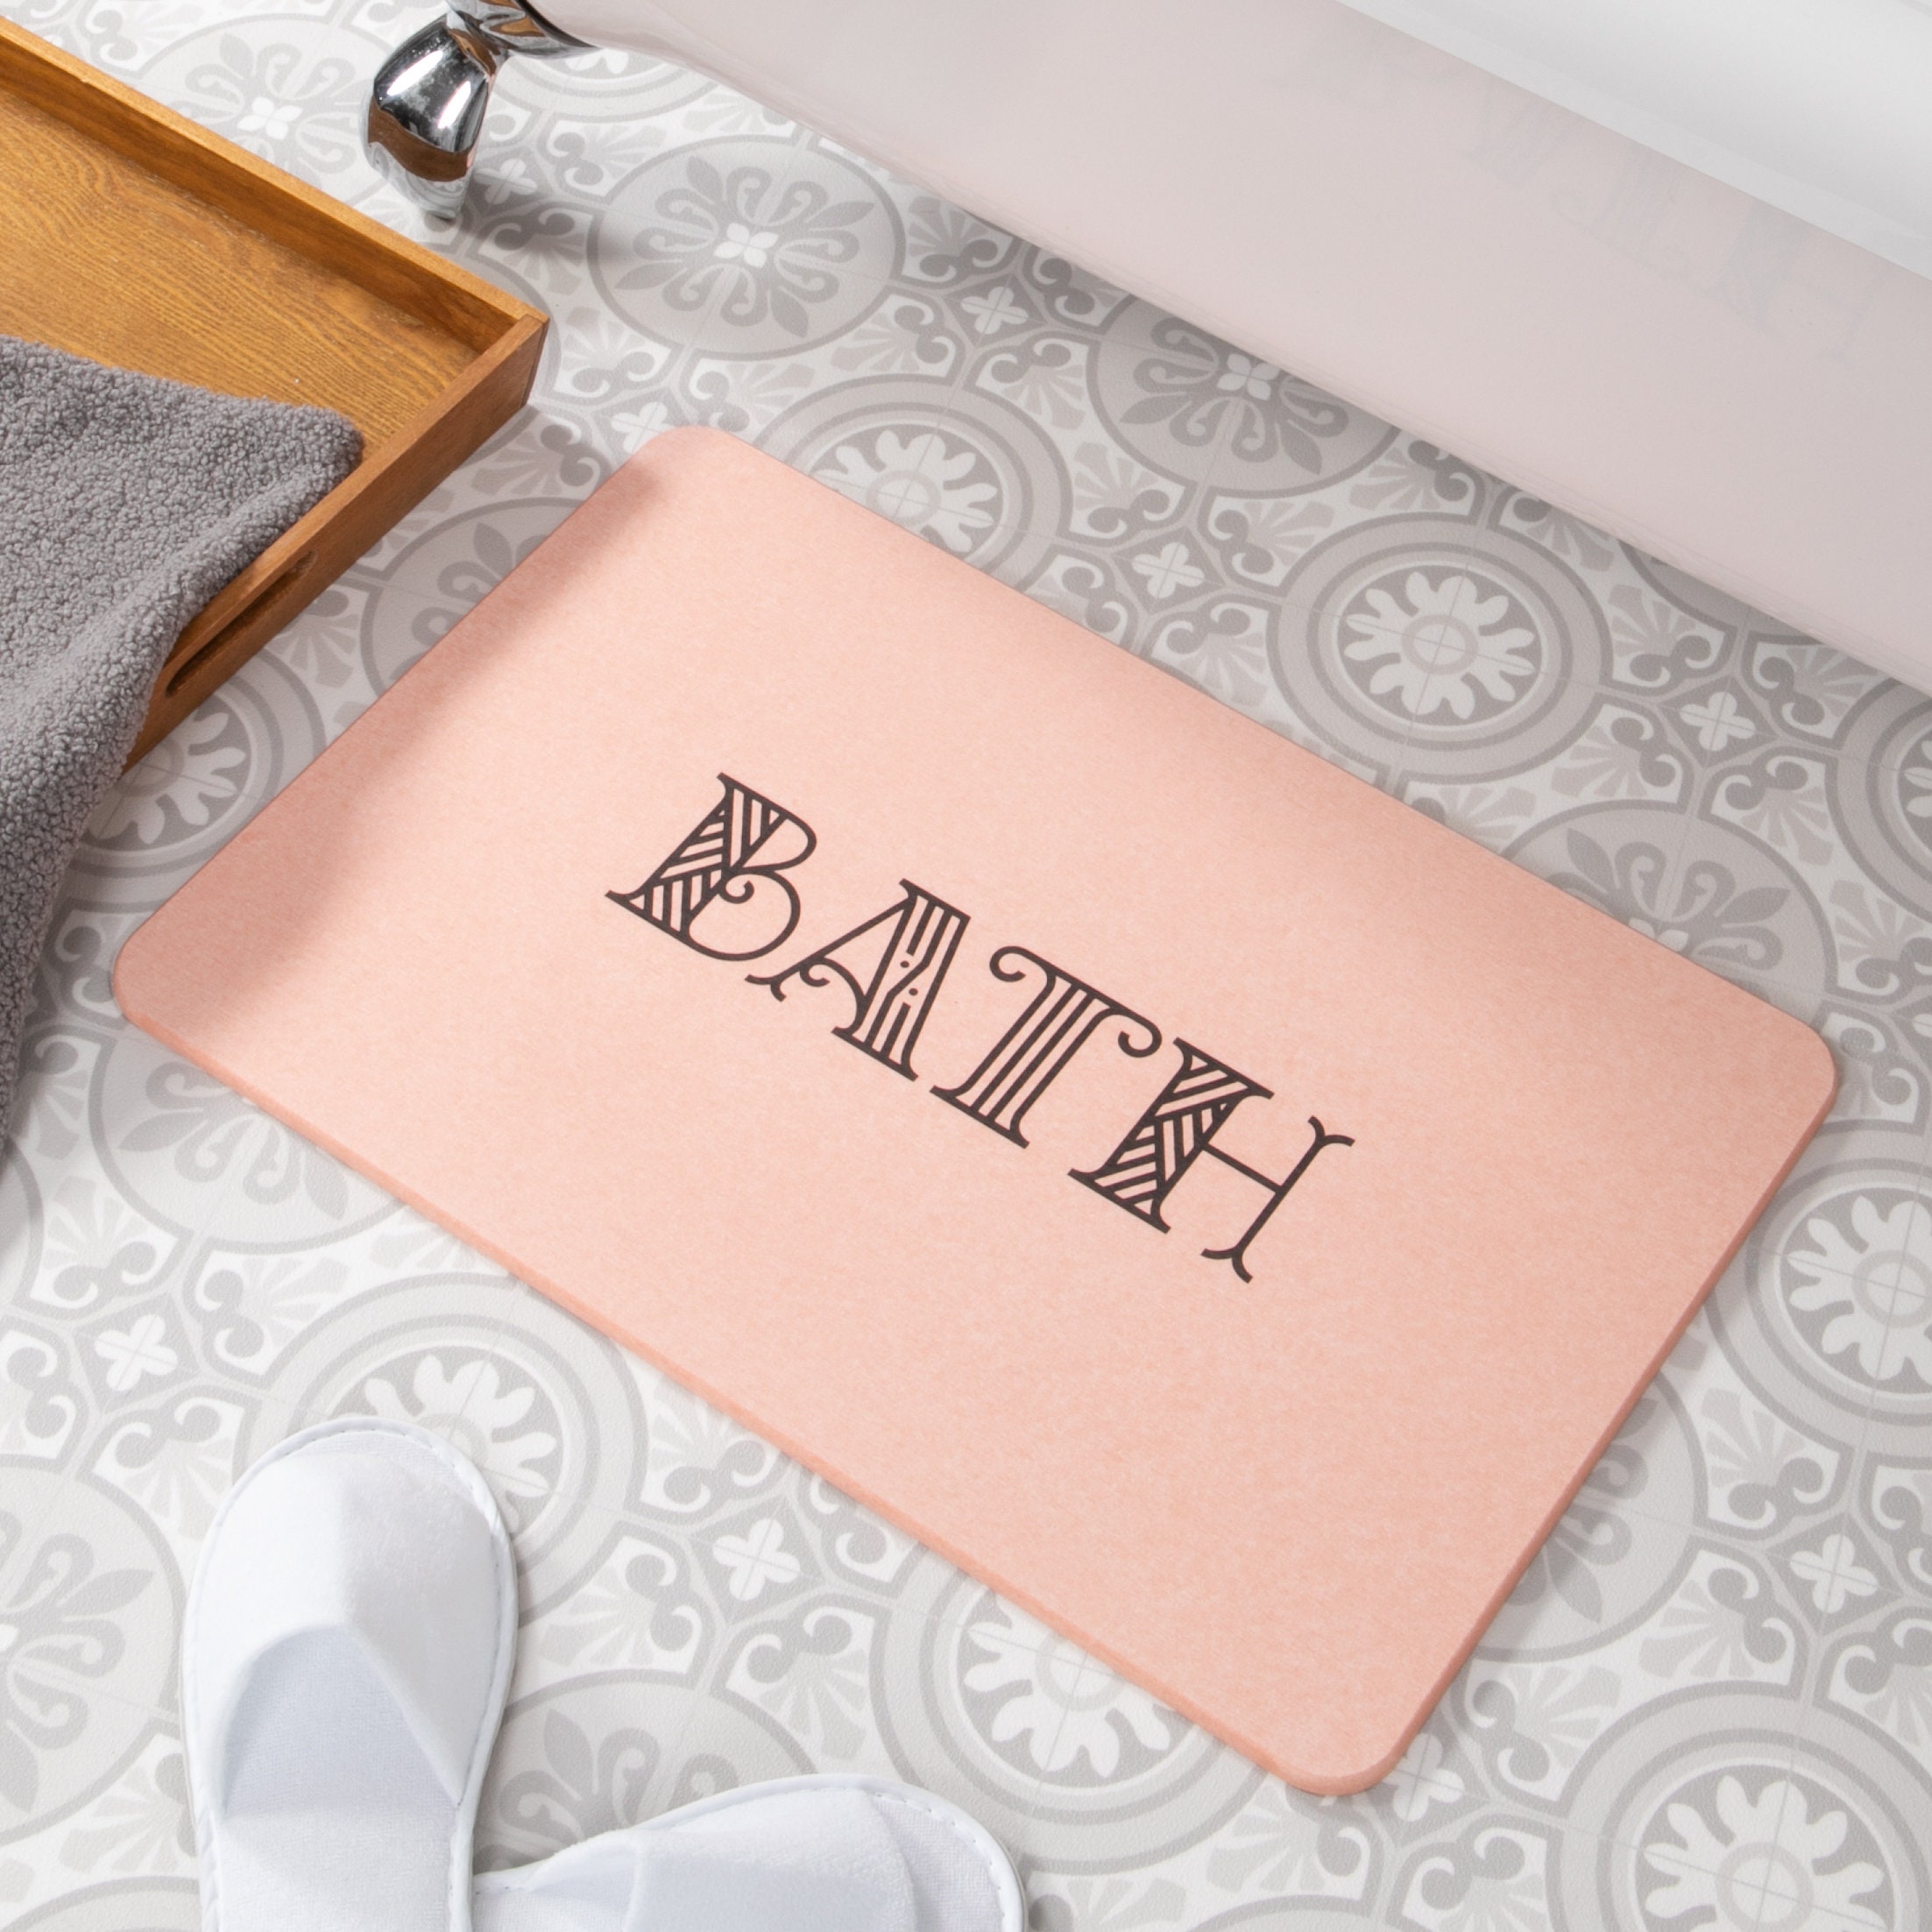 No-rinse coffee mat kitchen countertop mat - Bed Bath & Beyond - 39524742